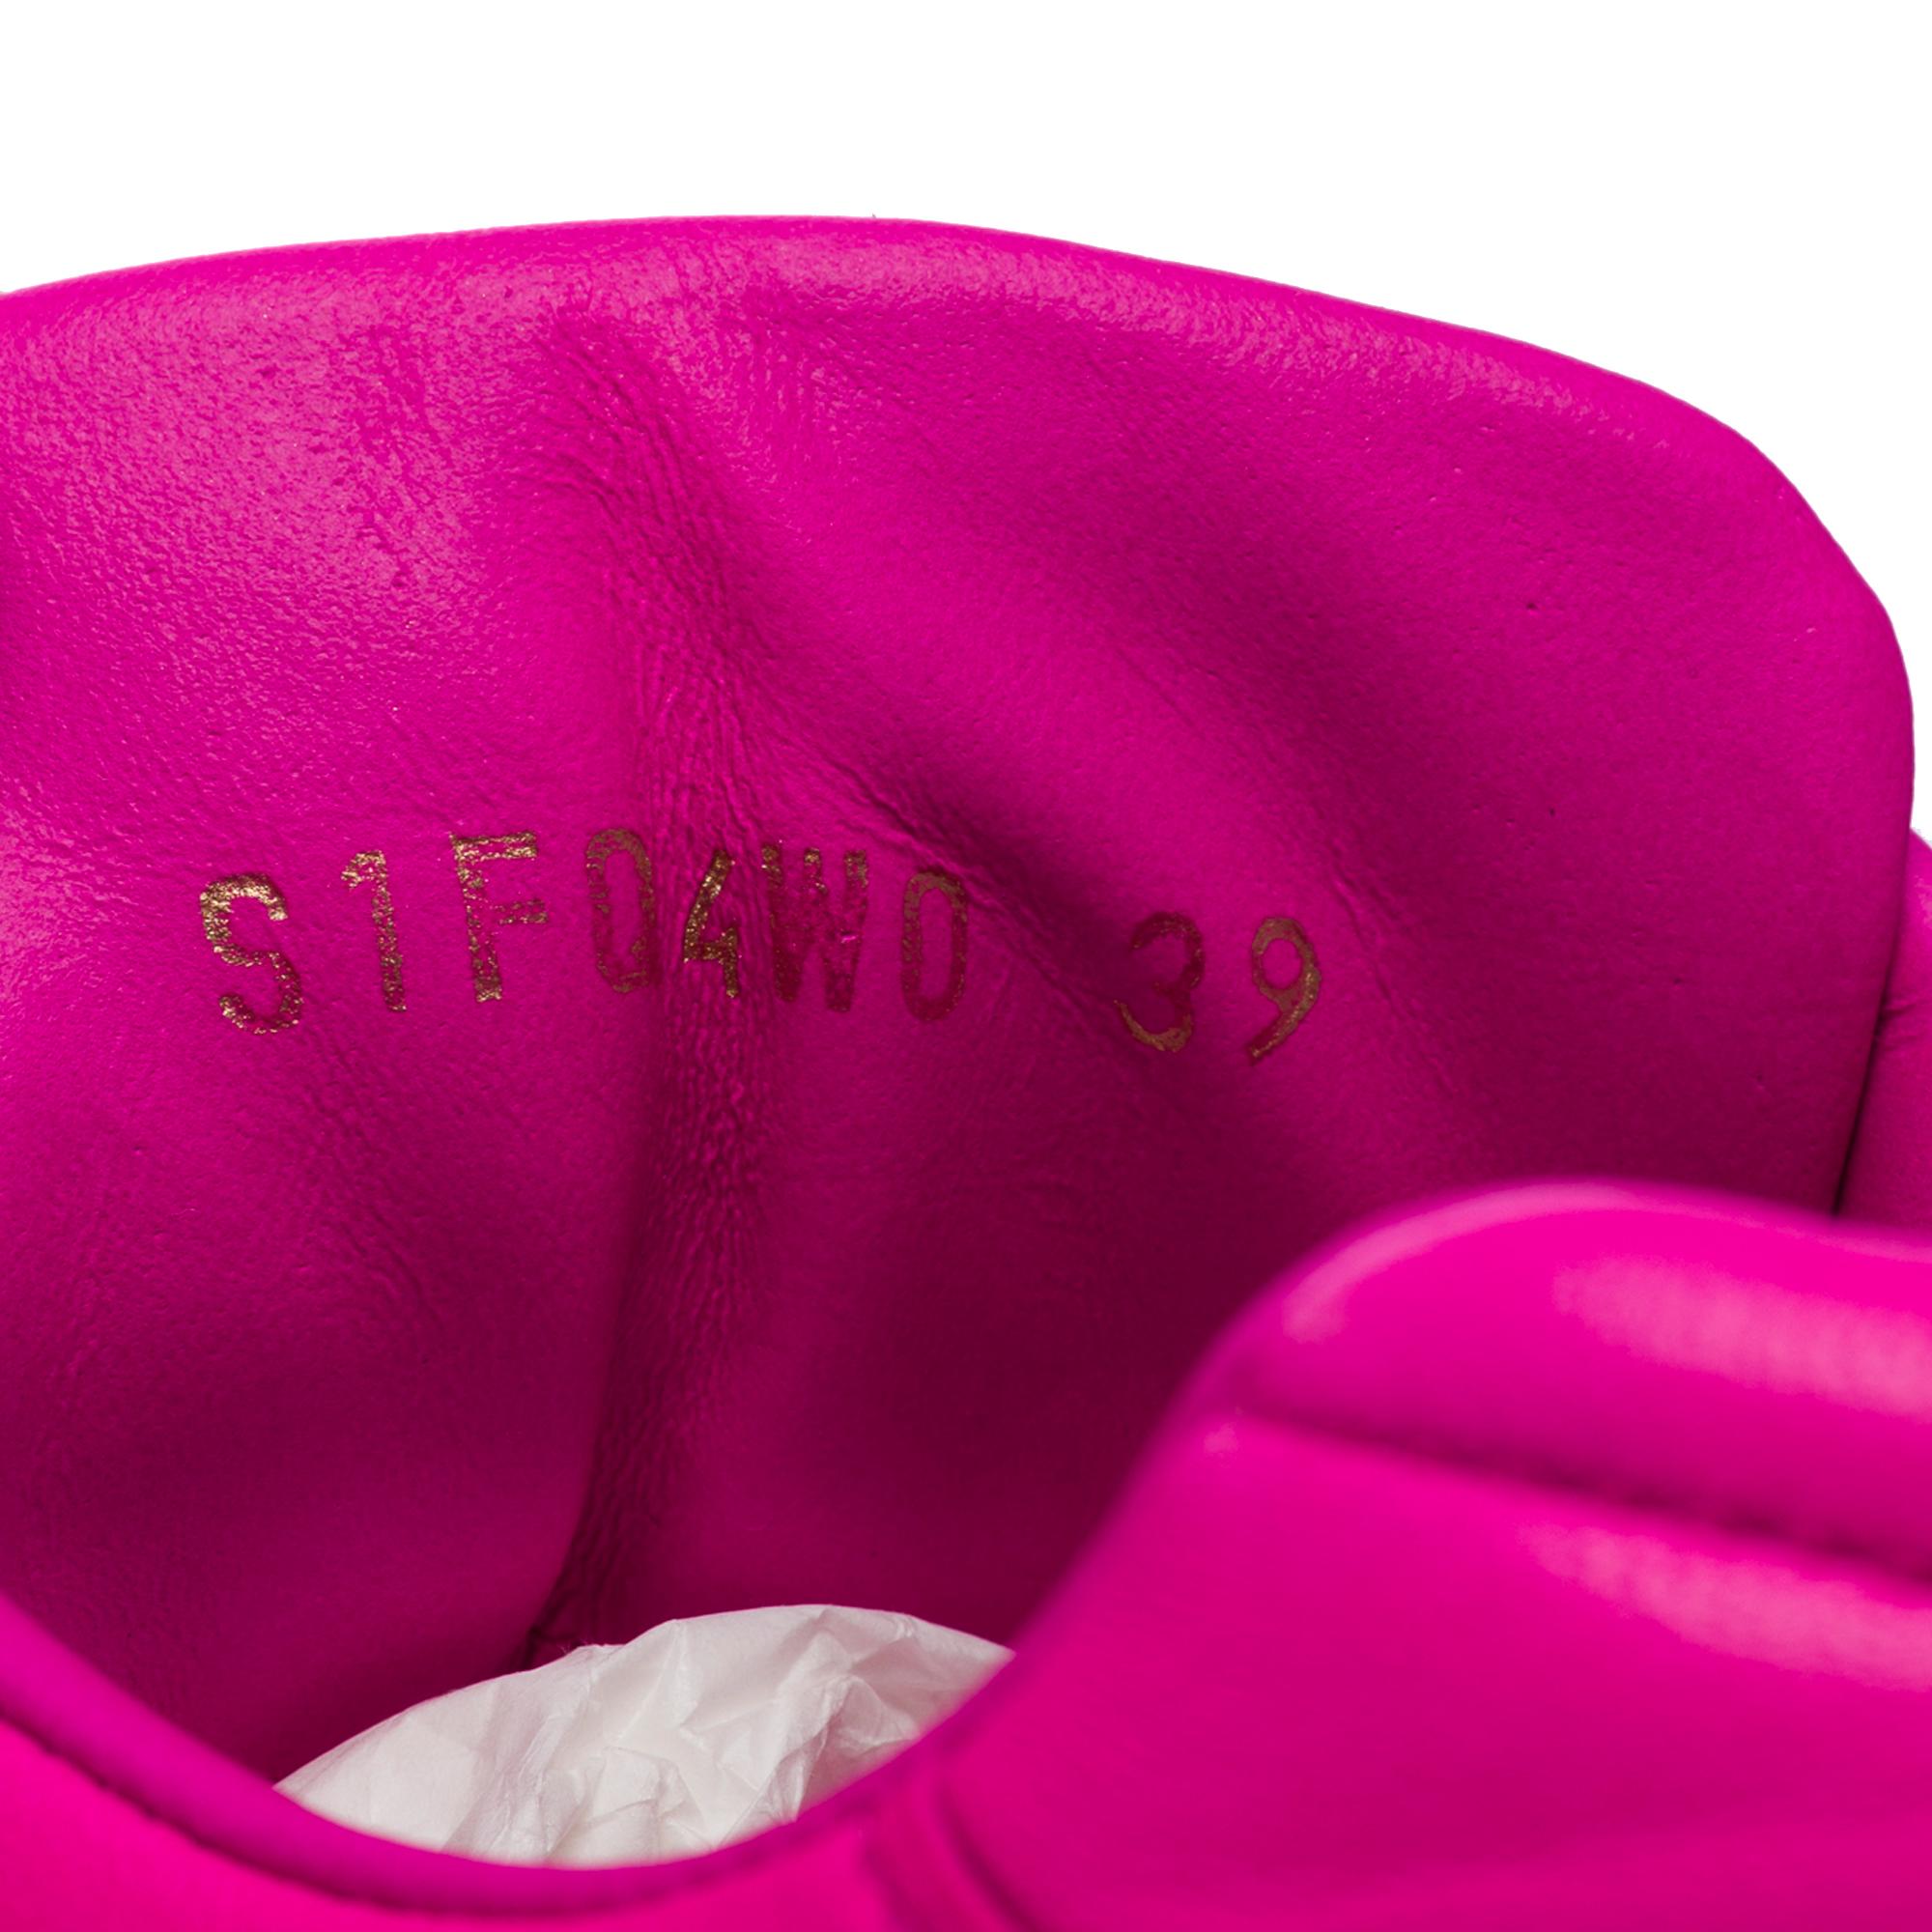 New Valentino Garavani ONE STUD XL Women Sneakers in Pink leather, Size 39 7